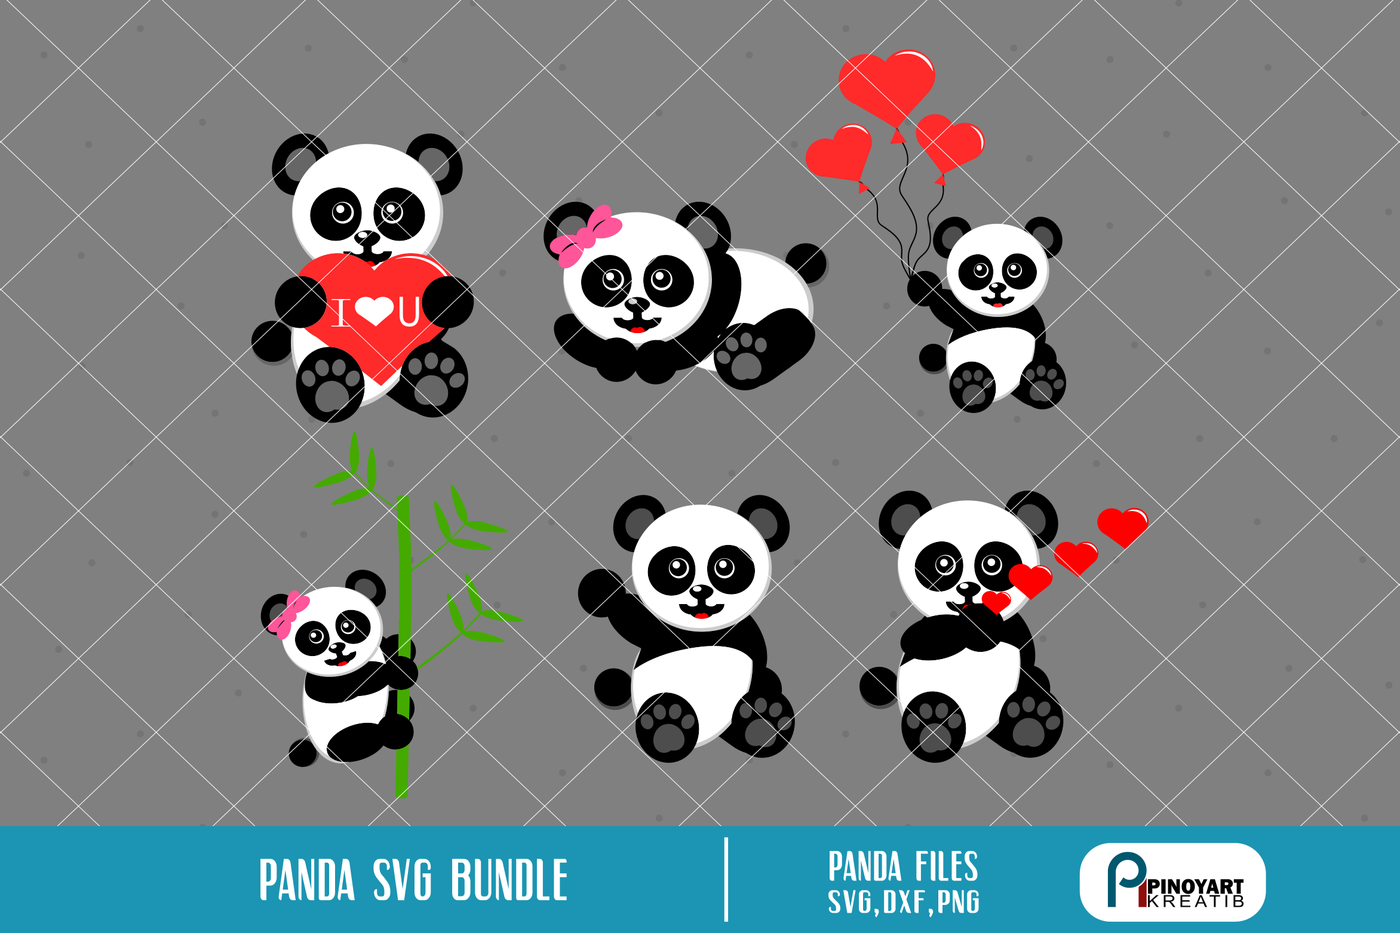 ori 3433240 4dd3f3c9b32722afc482cdd2323b515050dcfac9 panda svg panda svg file panda svg panda svg for cricut panda prints